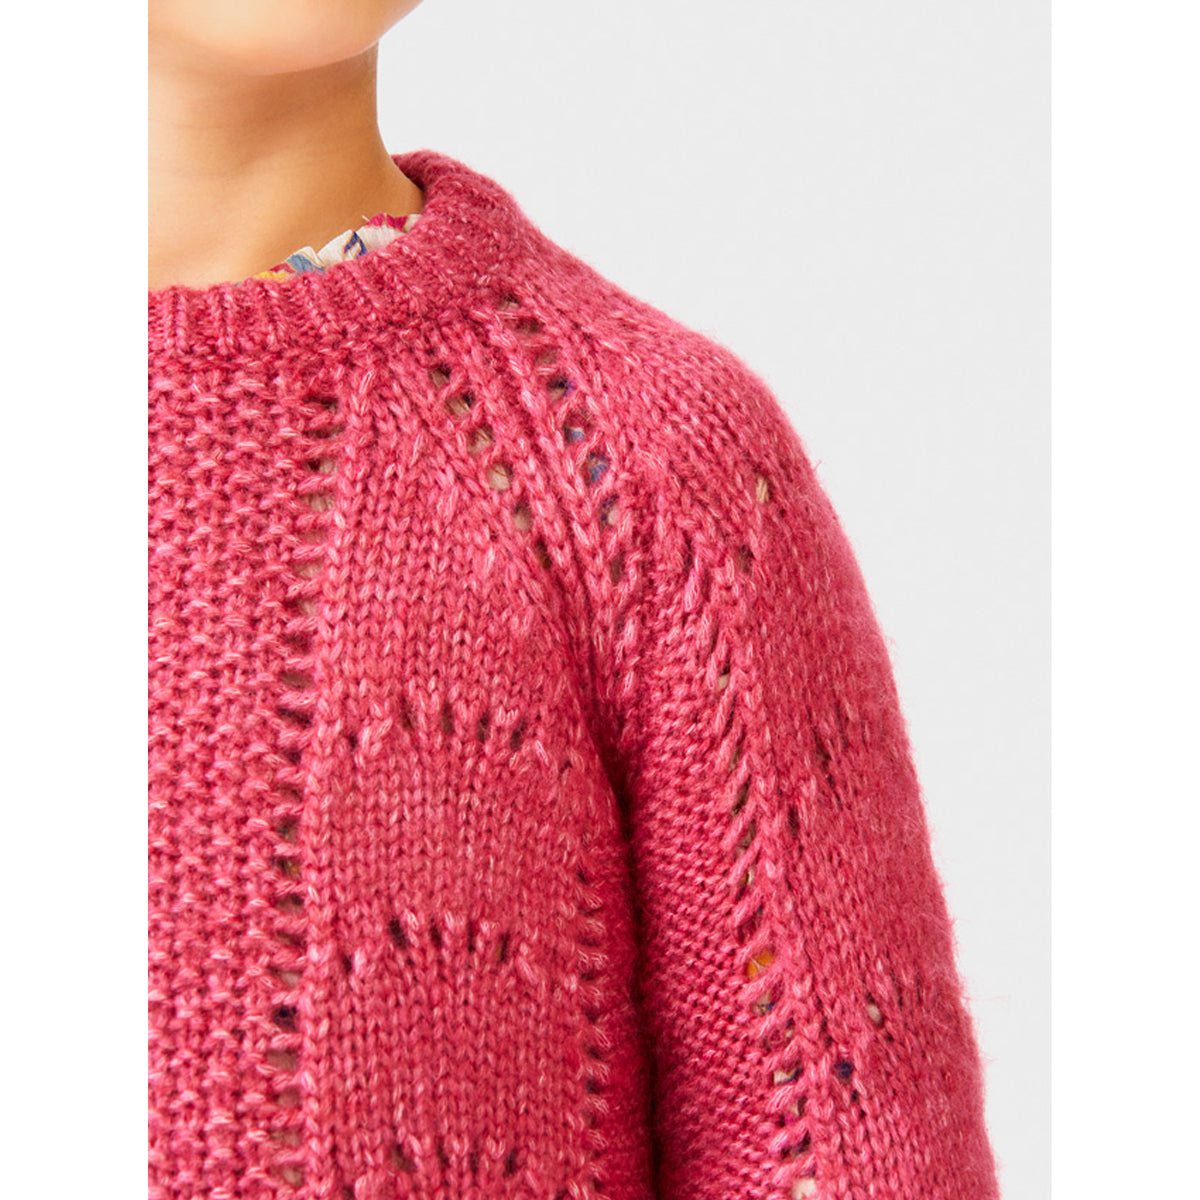 Raspberry Openwork Sweater